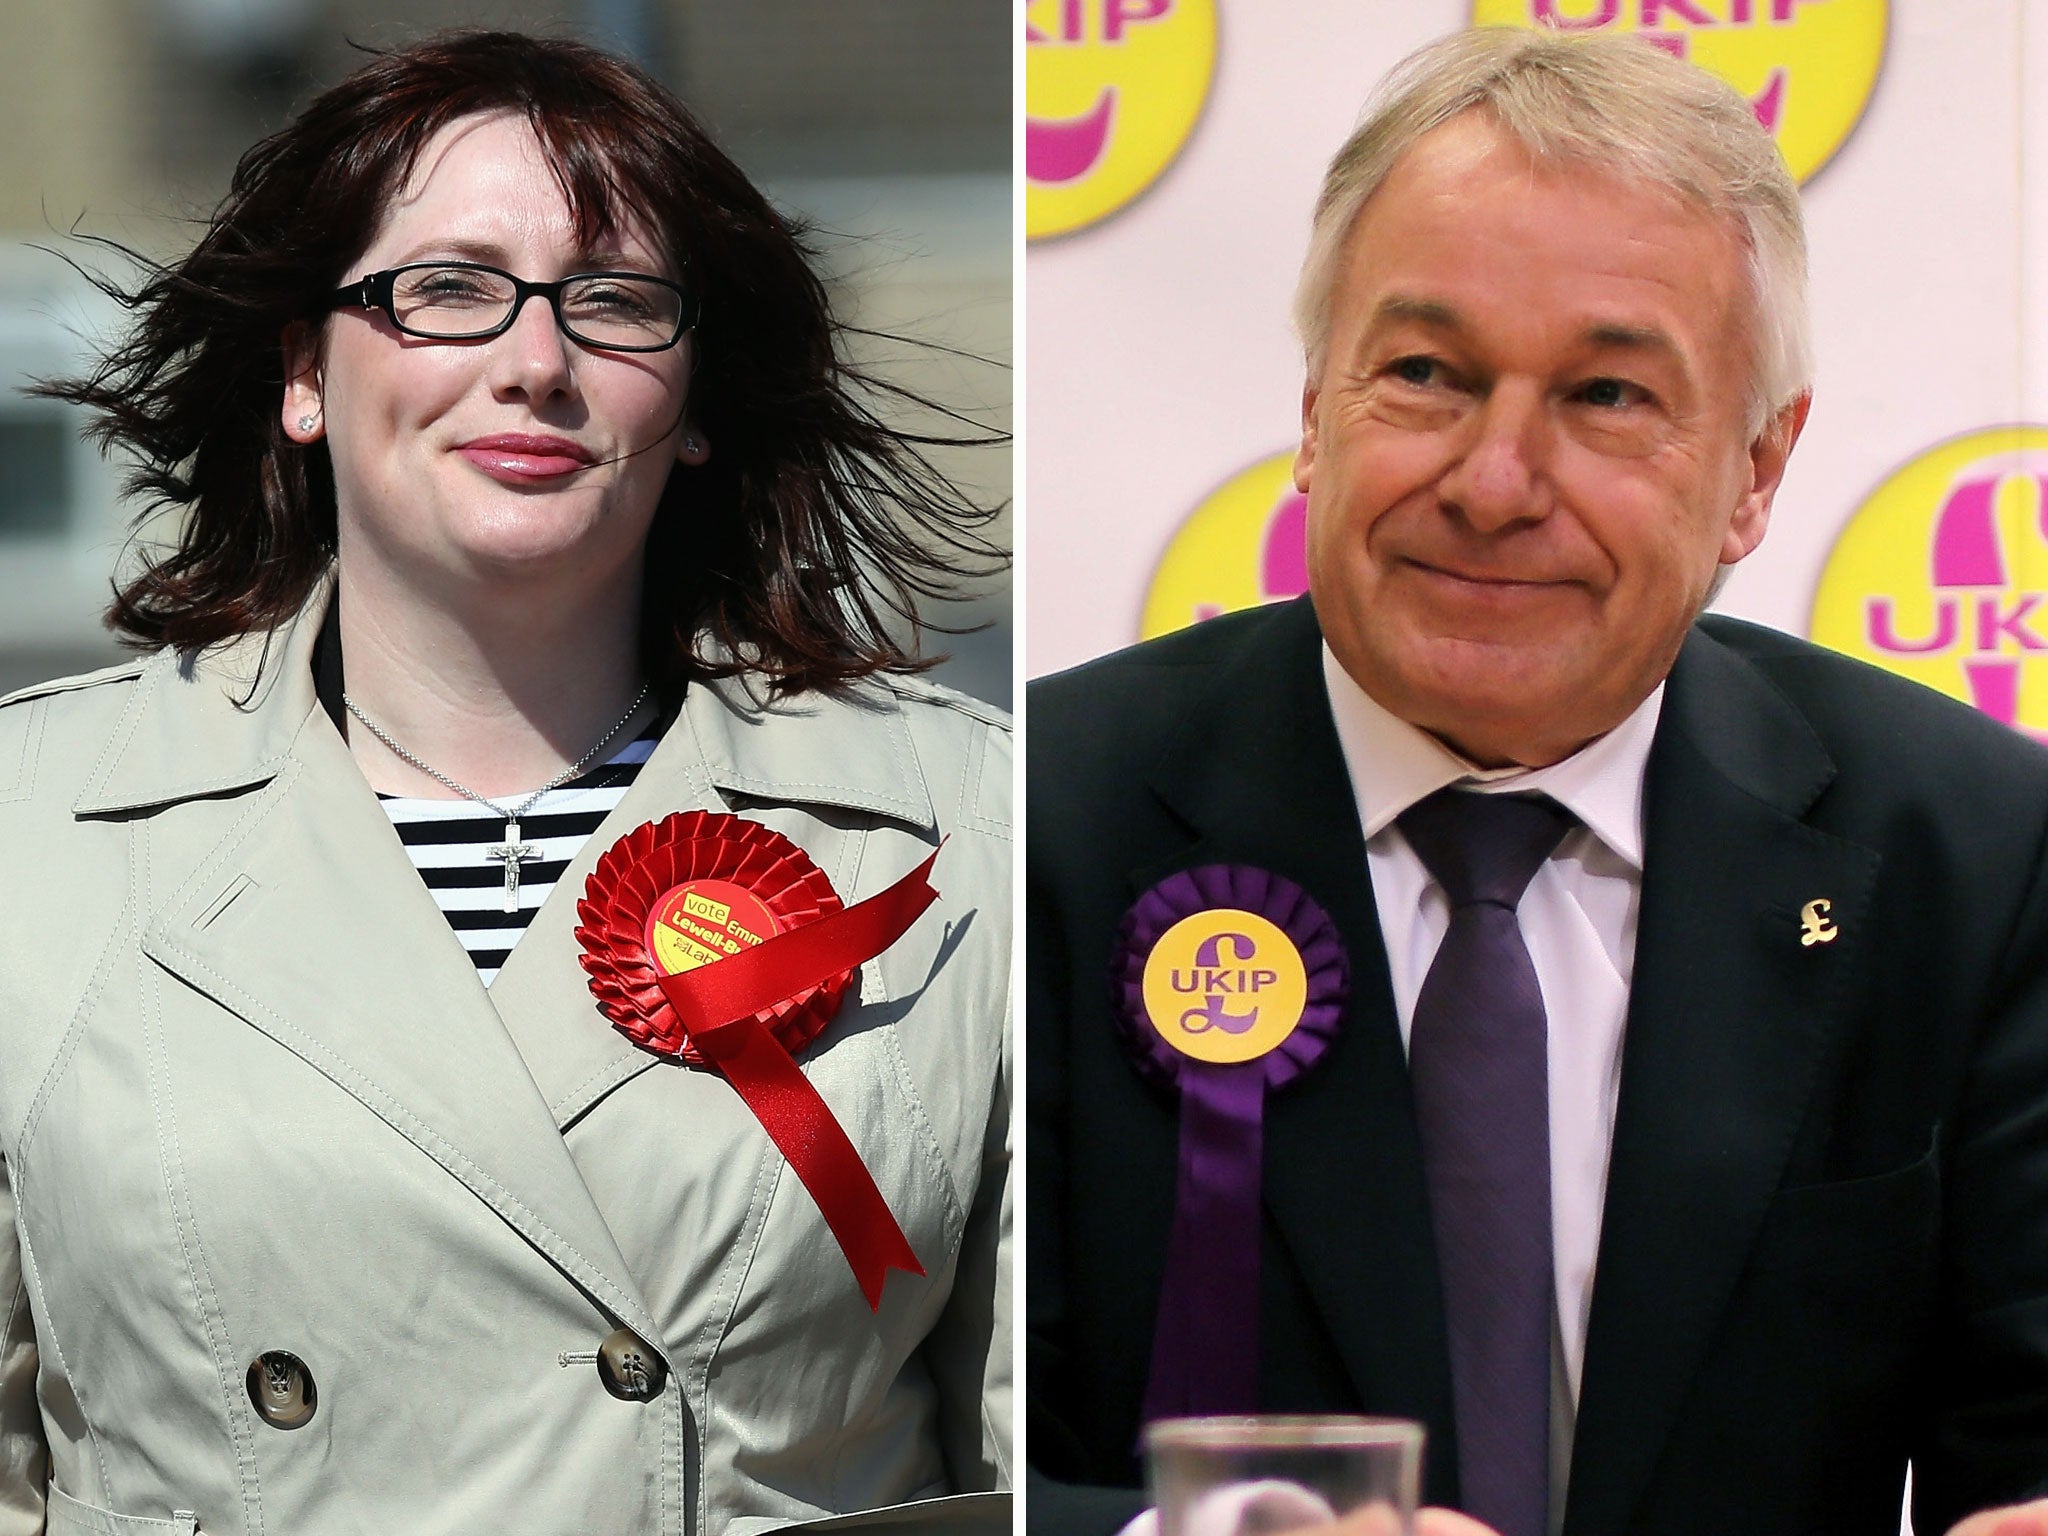 Labour candidate Emma Lewell-Buck beat UKIP candidate Richard Evlin